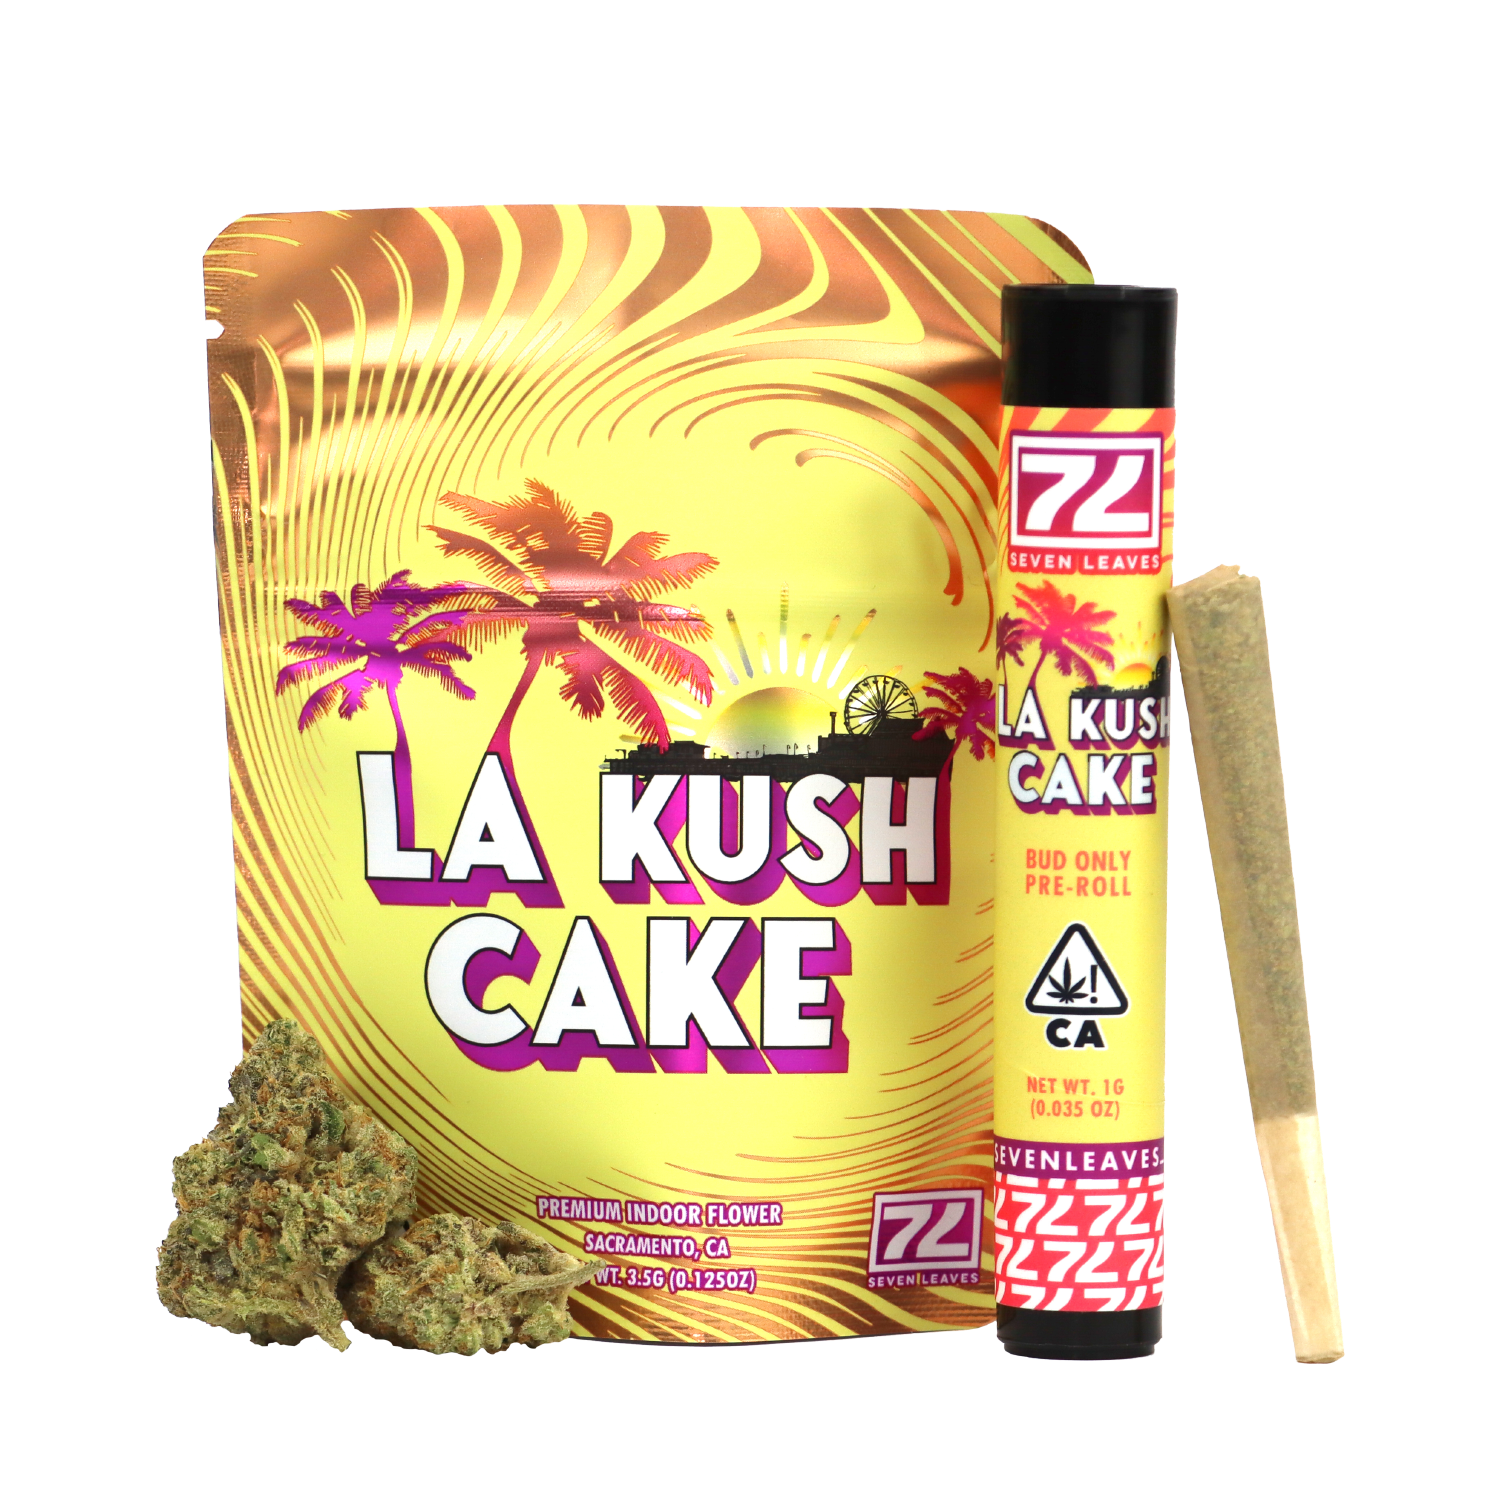 LA KUSH CAKE